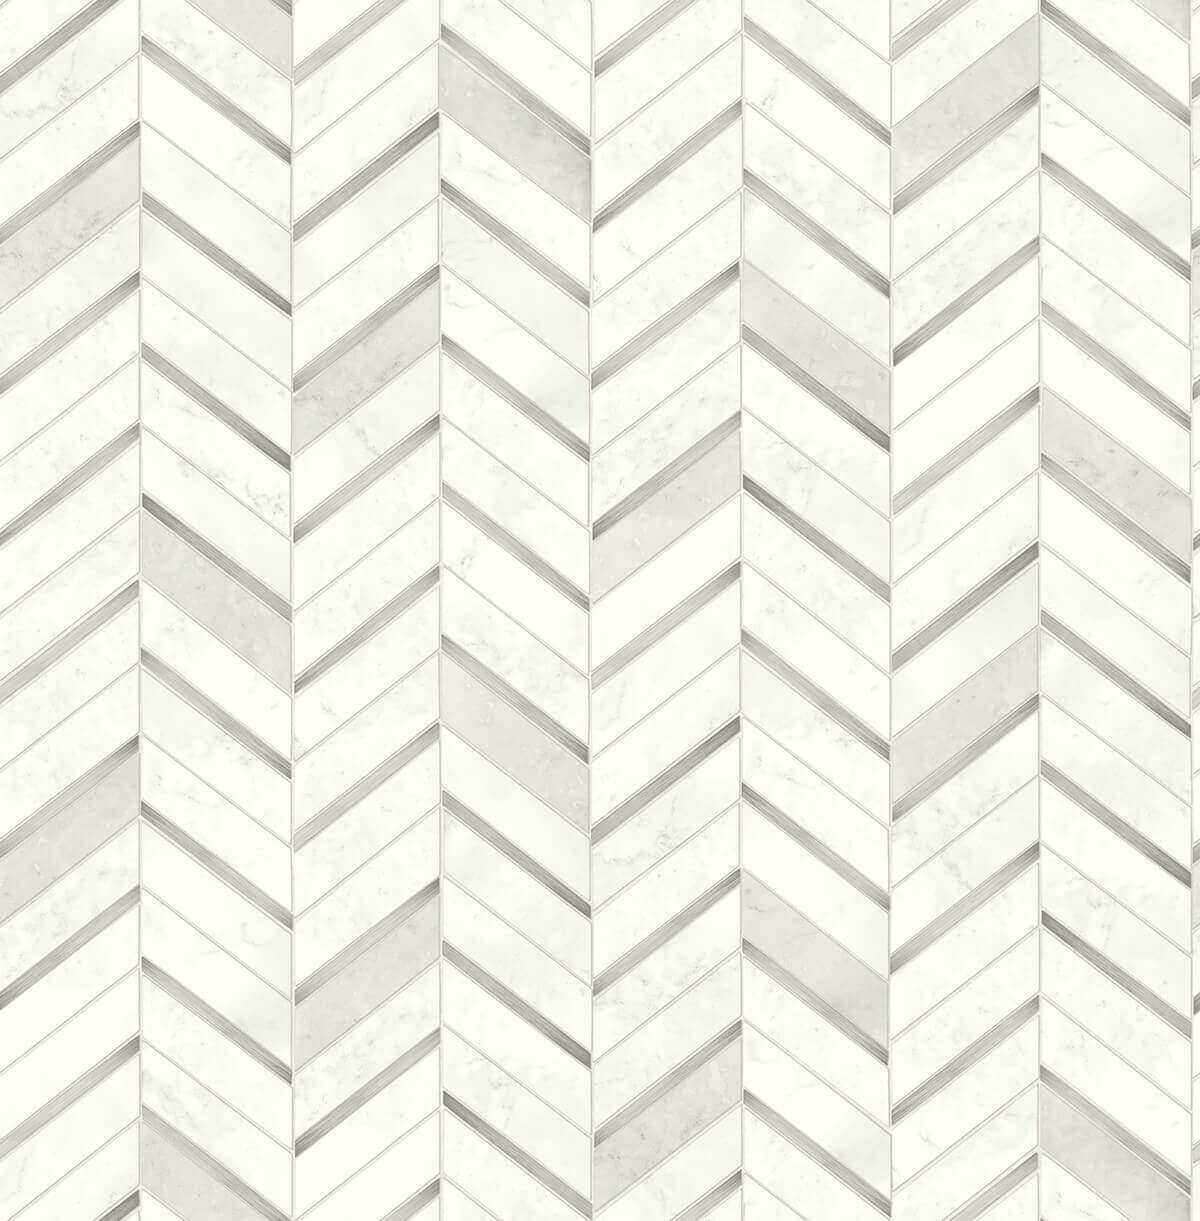 NextWall Chevron Marble Tile Peel & Stick Wallpaper - Silver